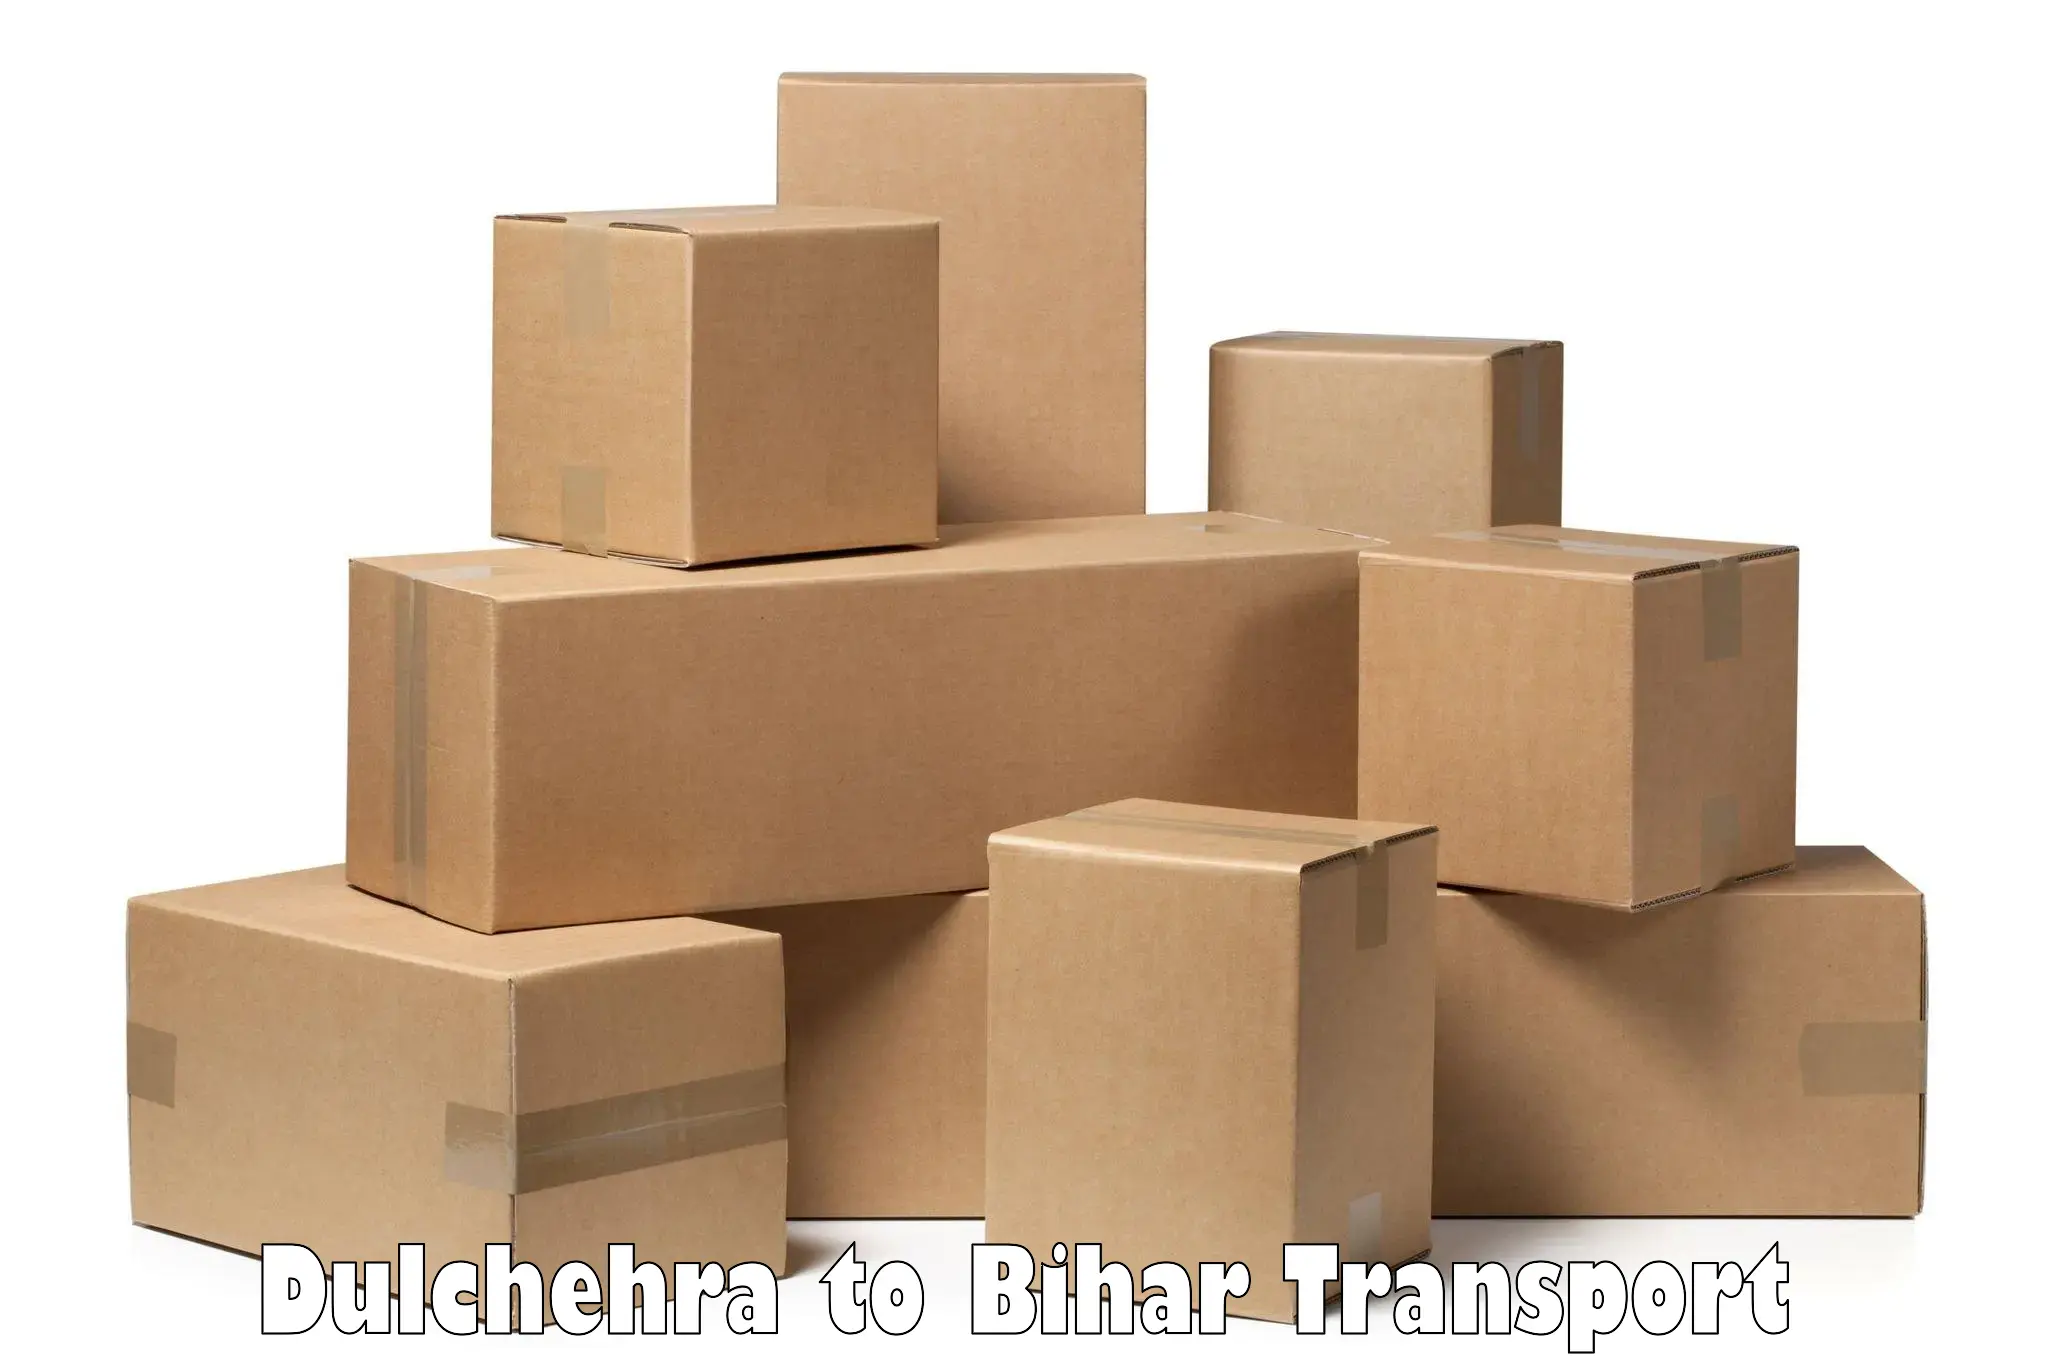 Commercial transport service Dulchehra to Piro